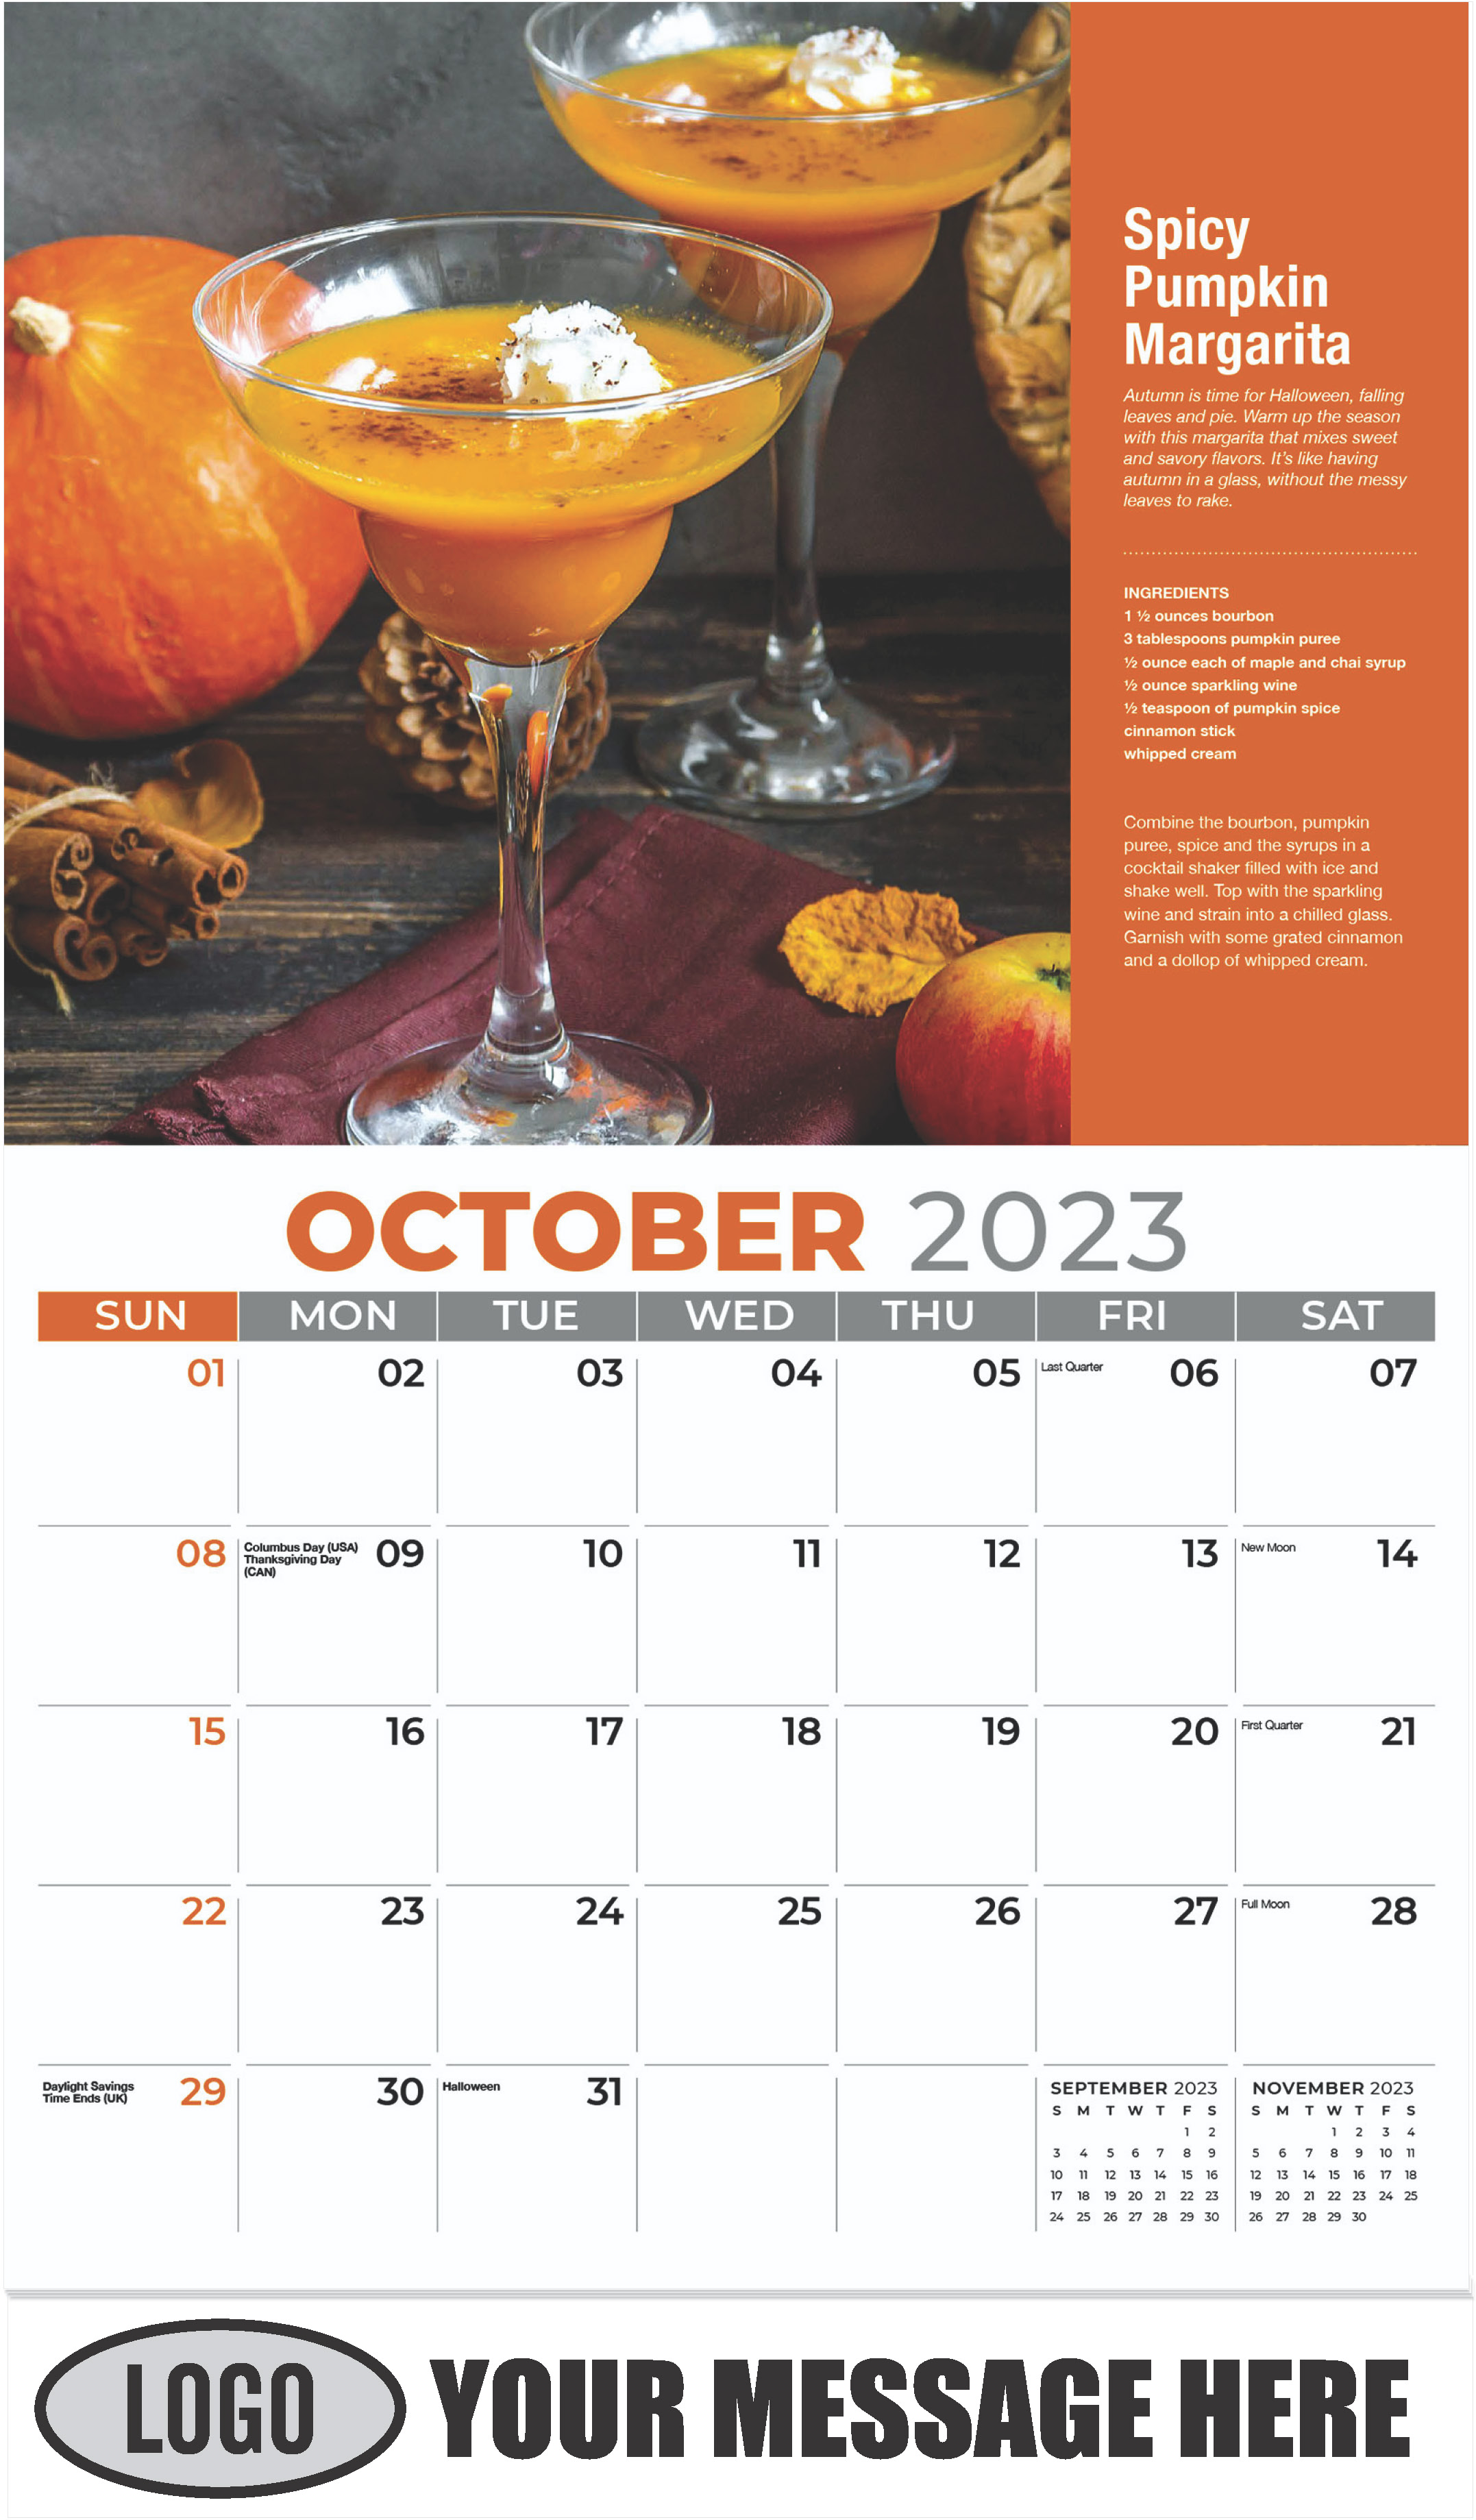 Spicy Pumpkin Margarita - October - Happy Hour Cocktails 2023 Promotional Calendar